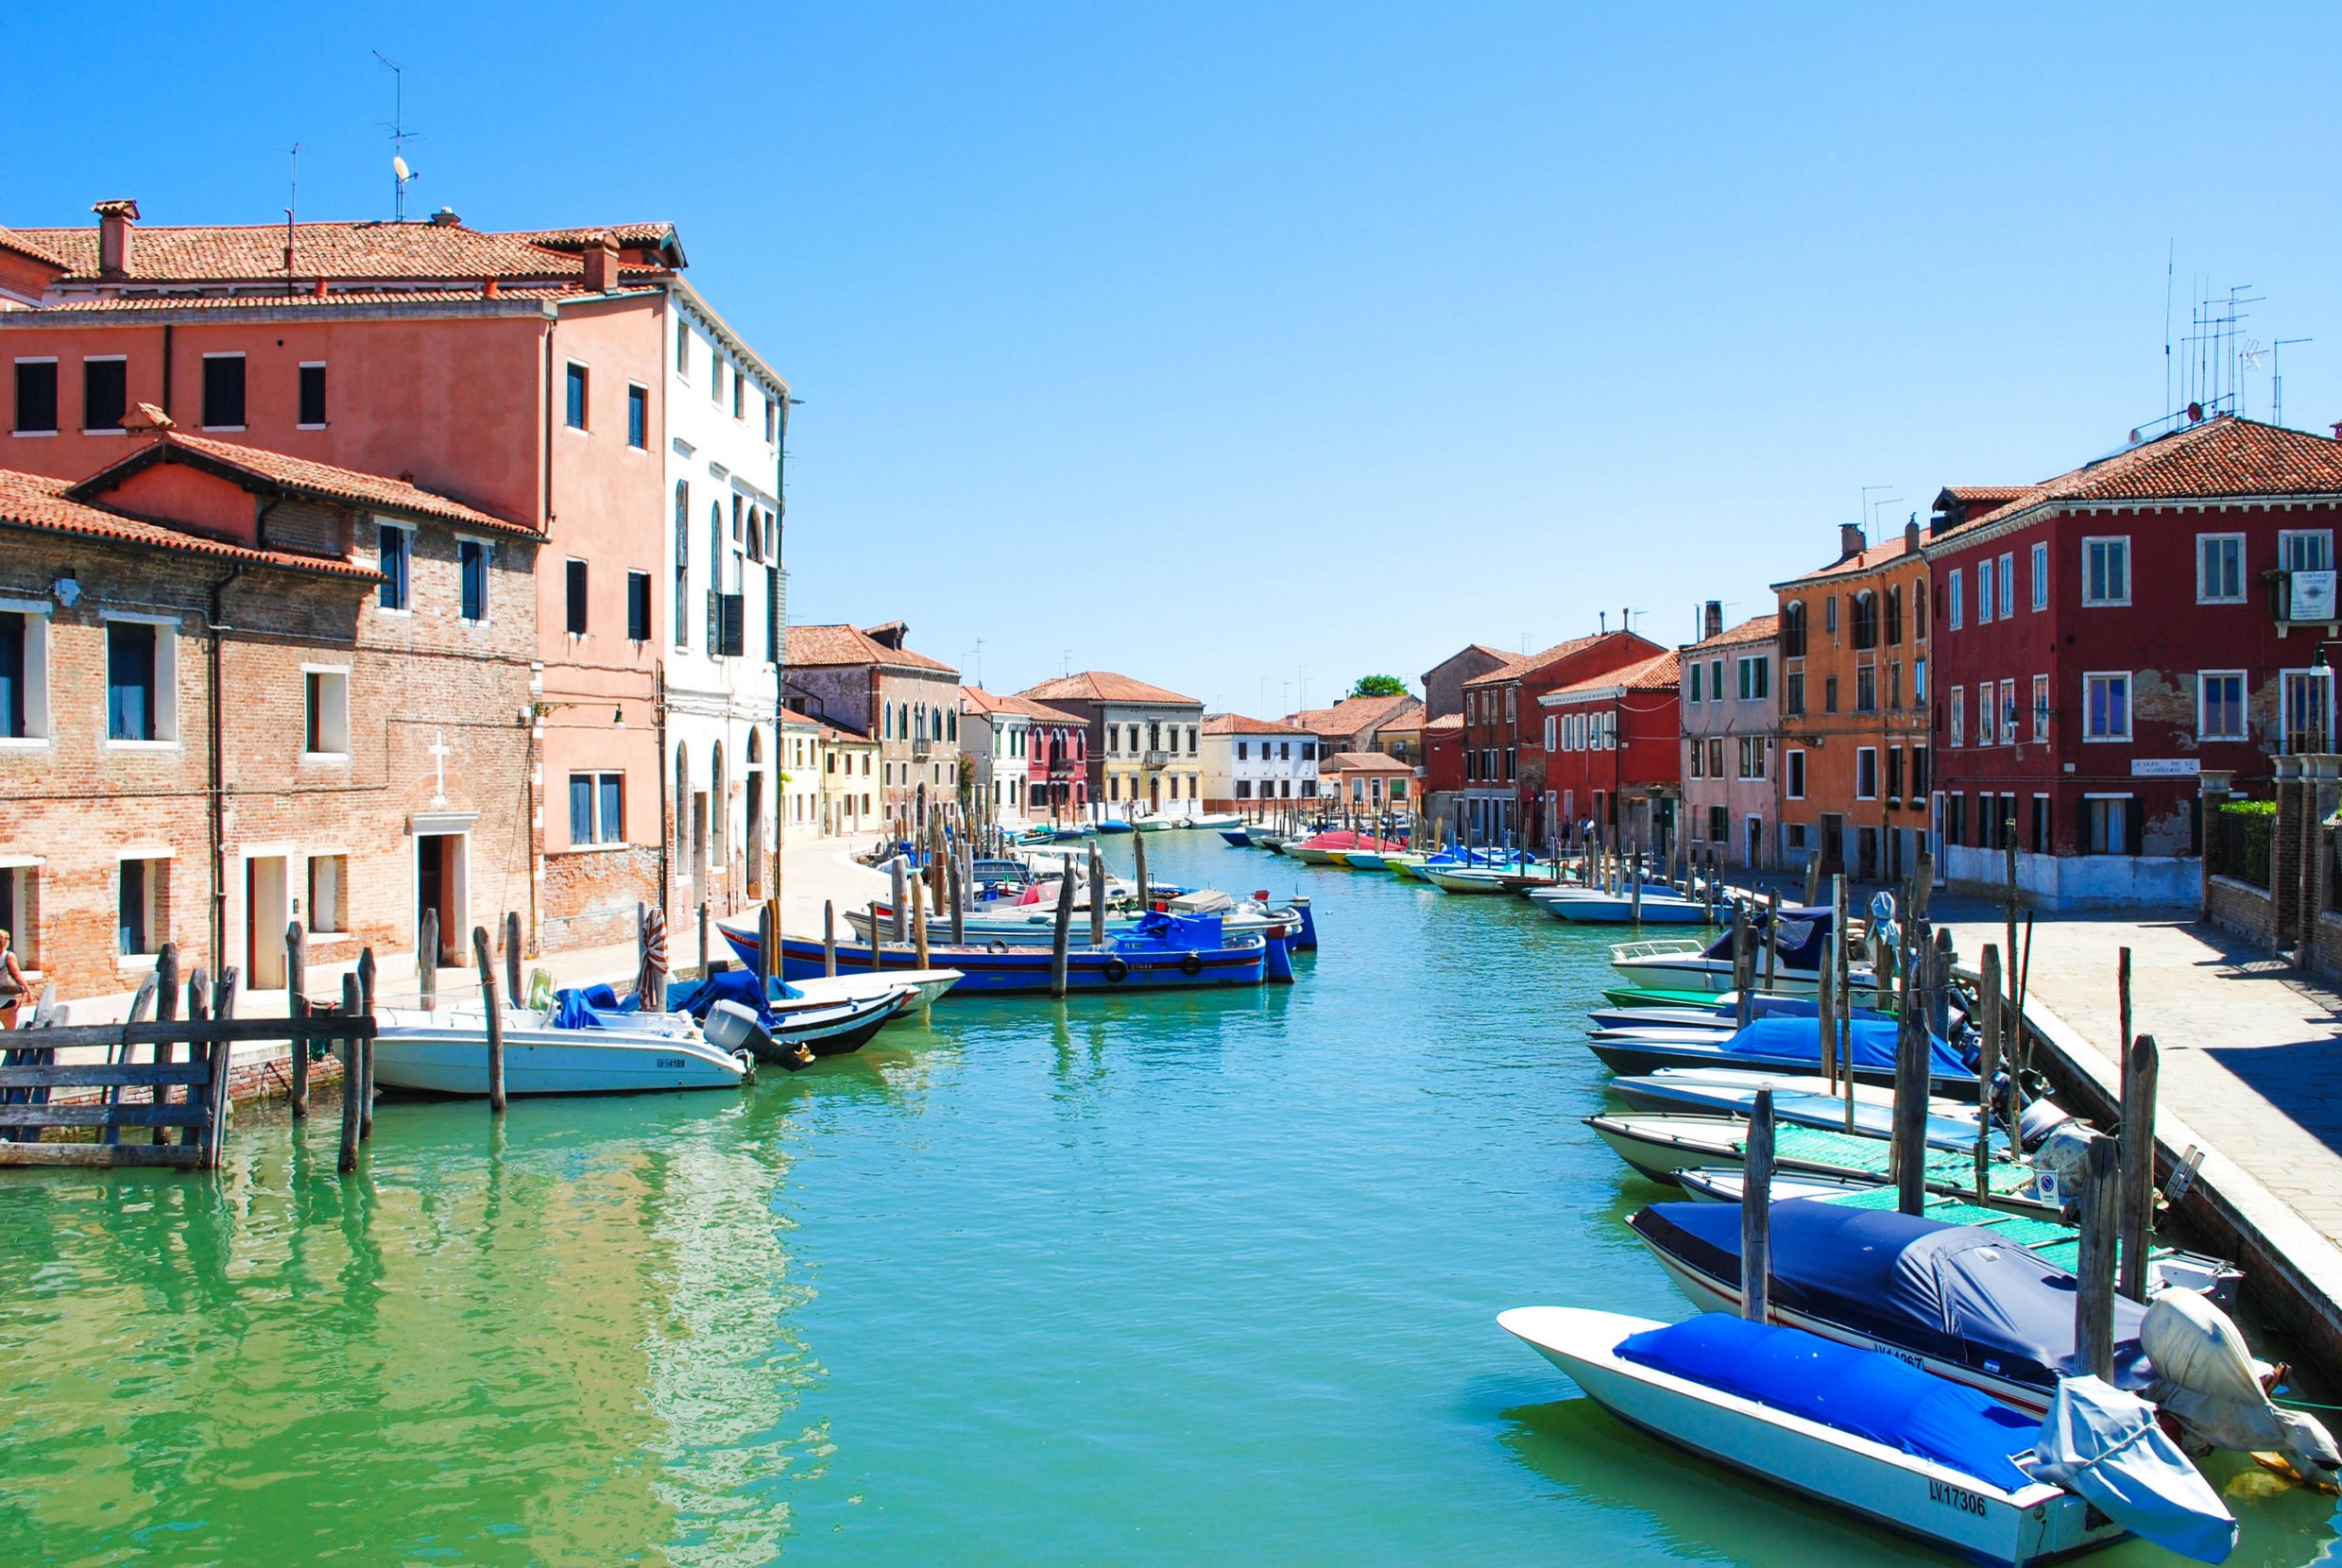 Murano in Venice, Italy